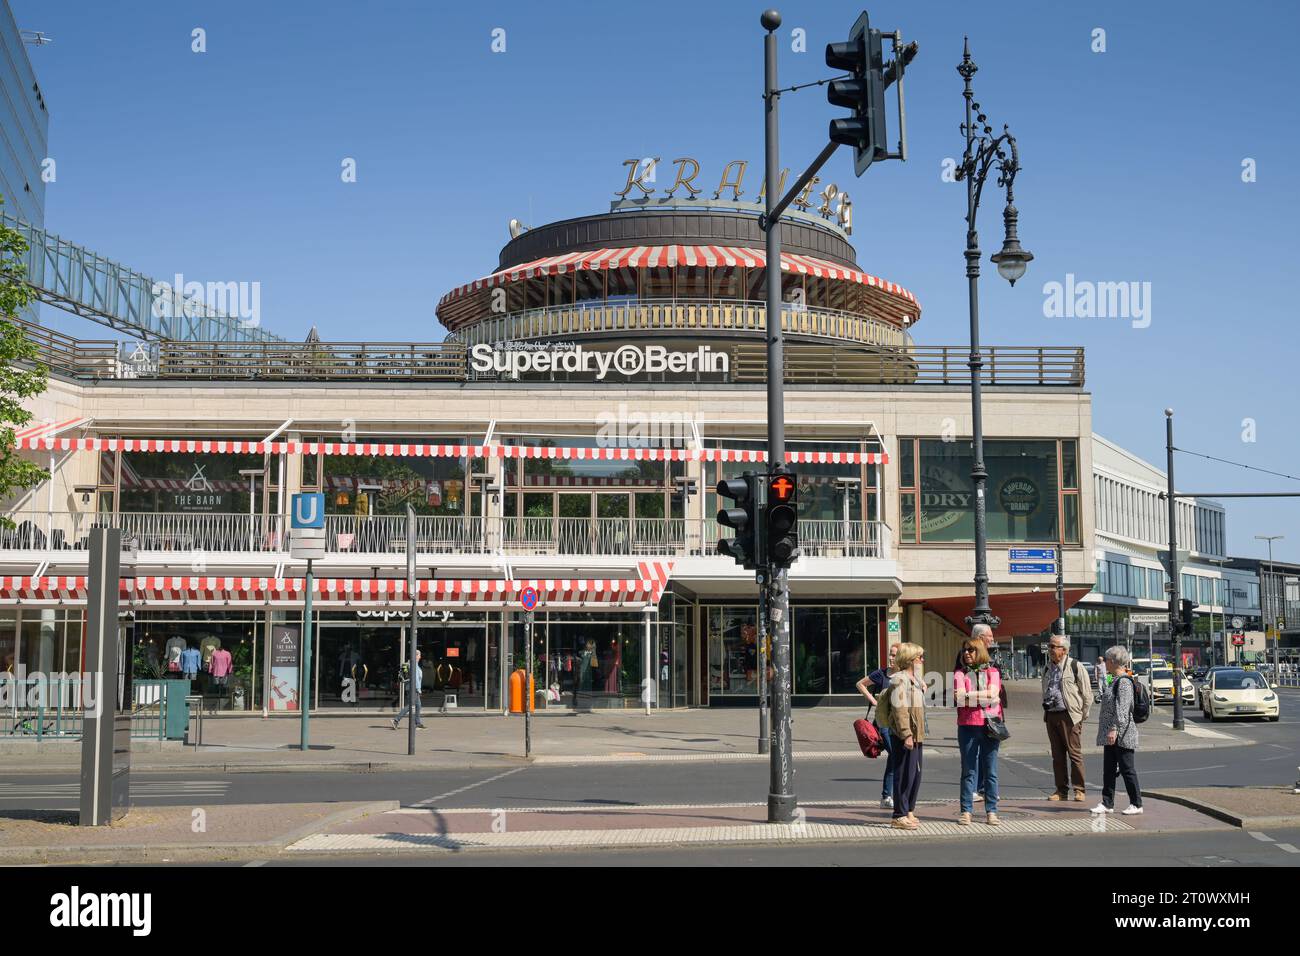 Superdry, Laden, Berlin, Deutschland Stock Photo - Alamy